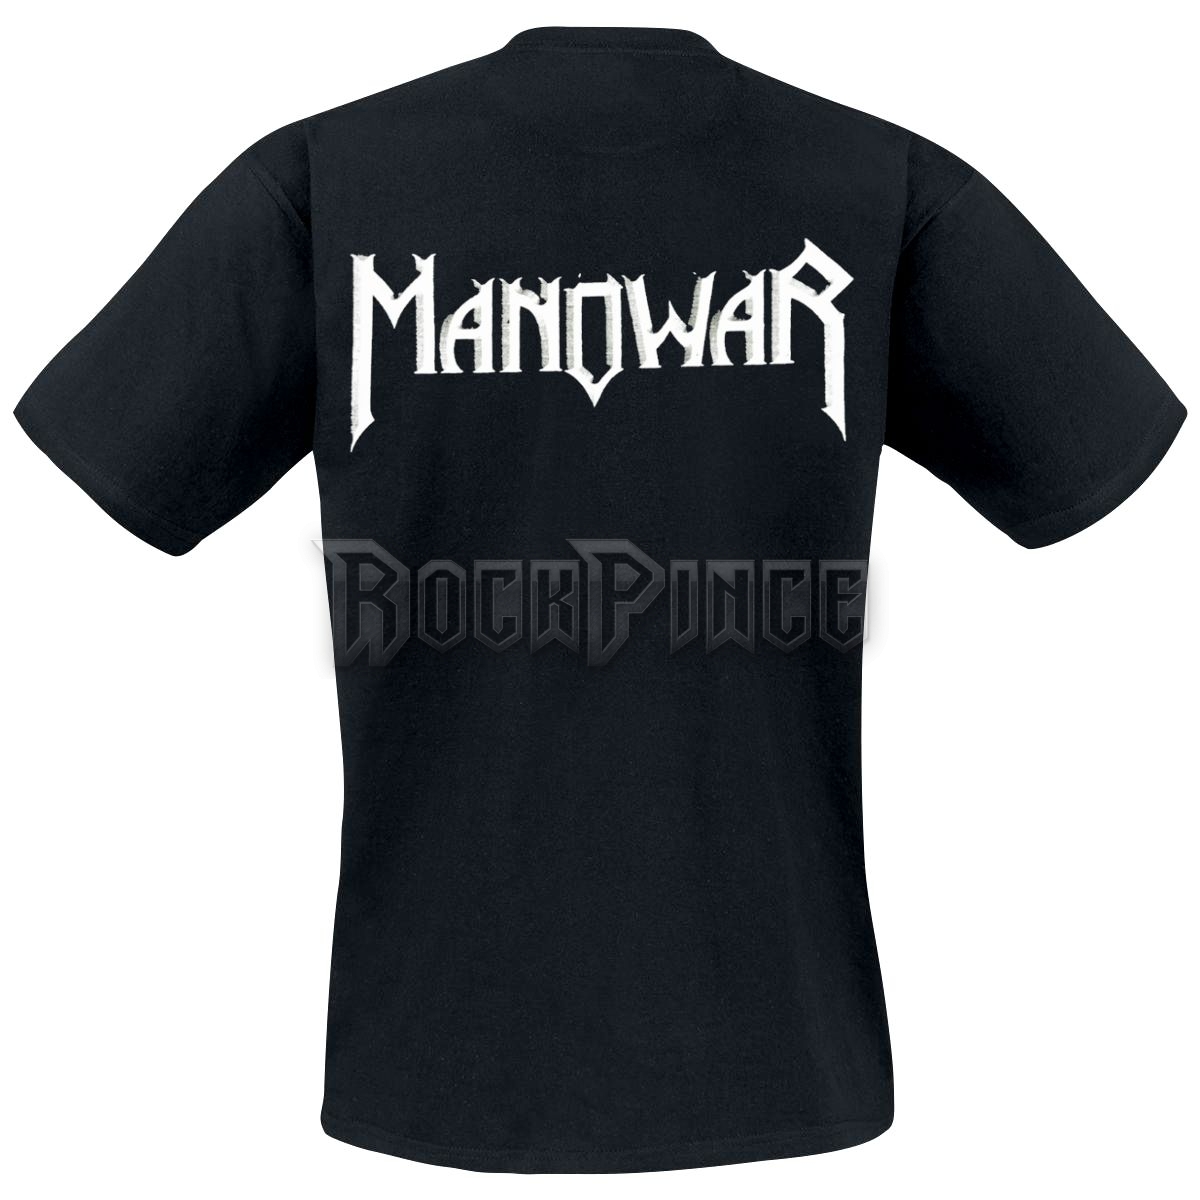 Manowar - Kings of Metal - UNISEX PÓLÓ